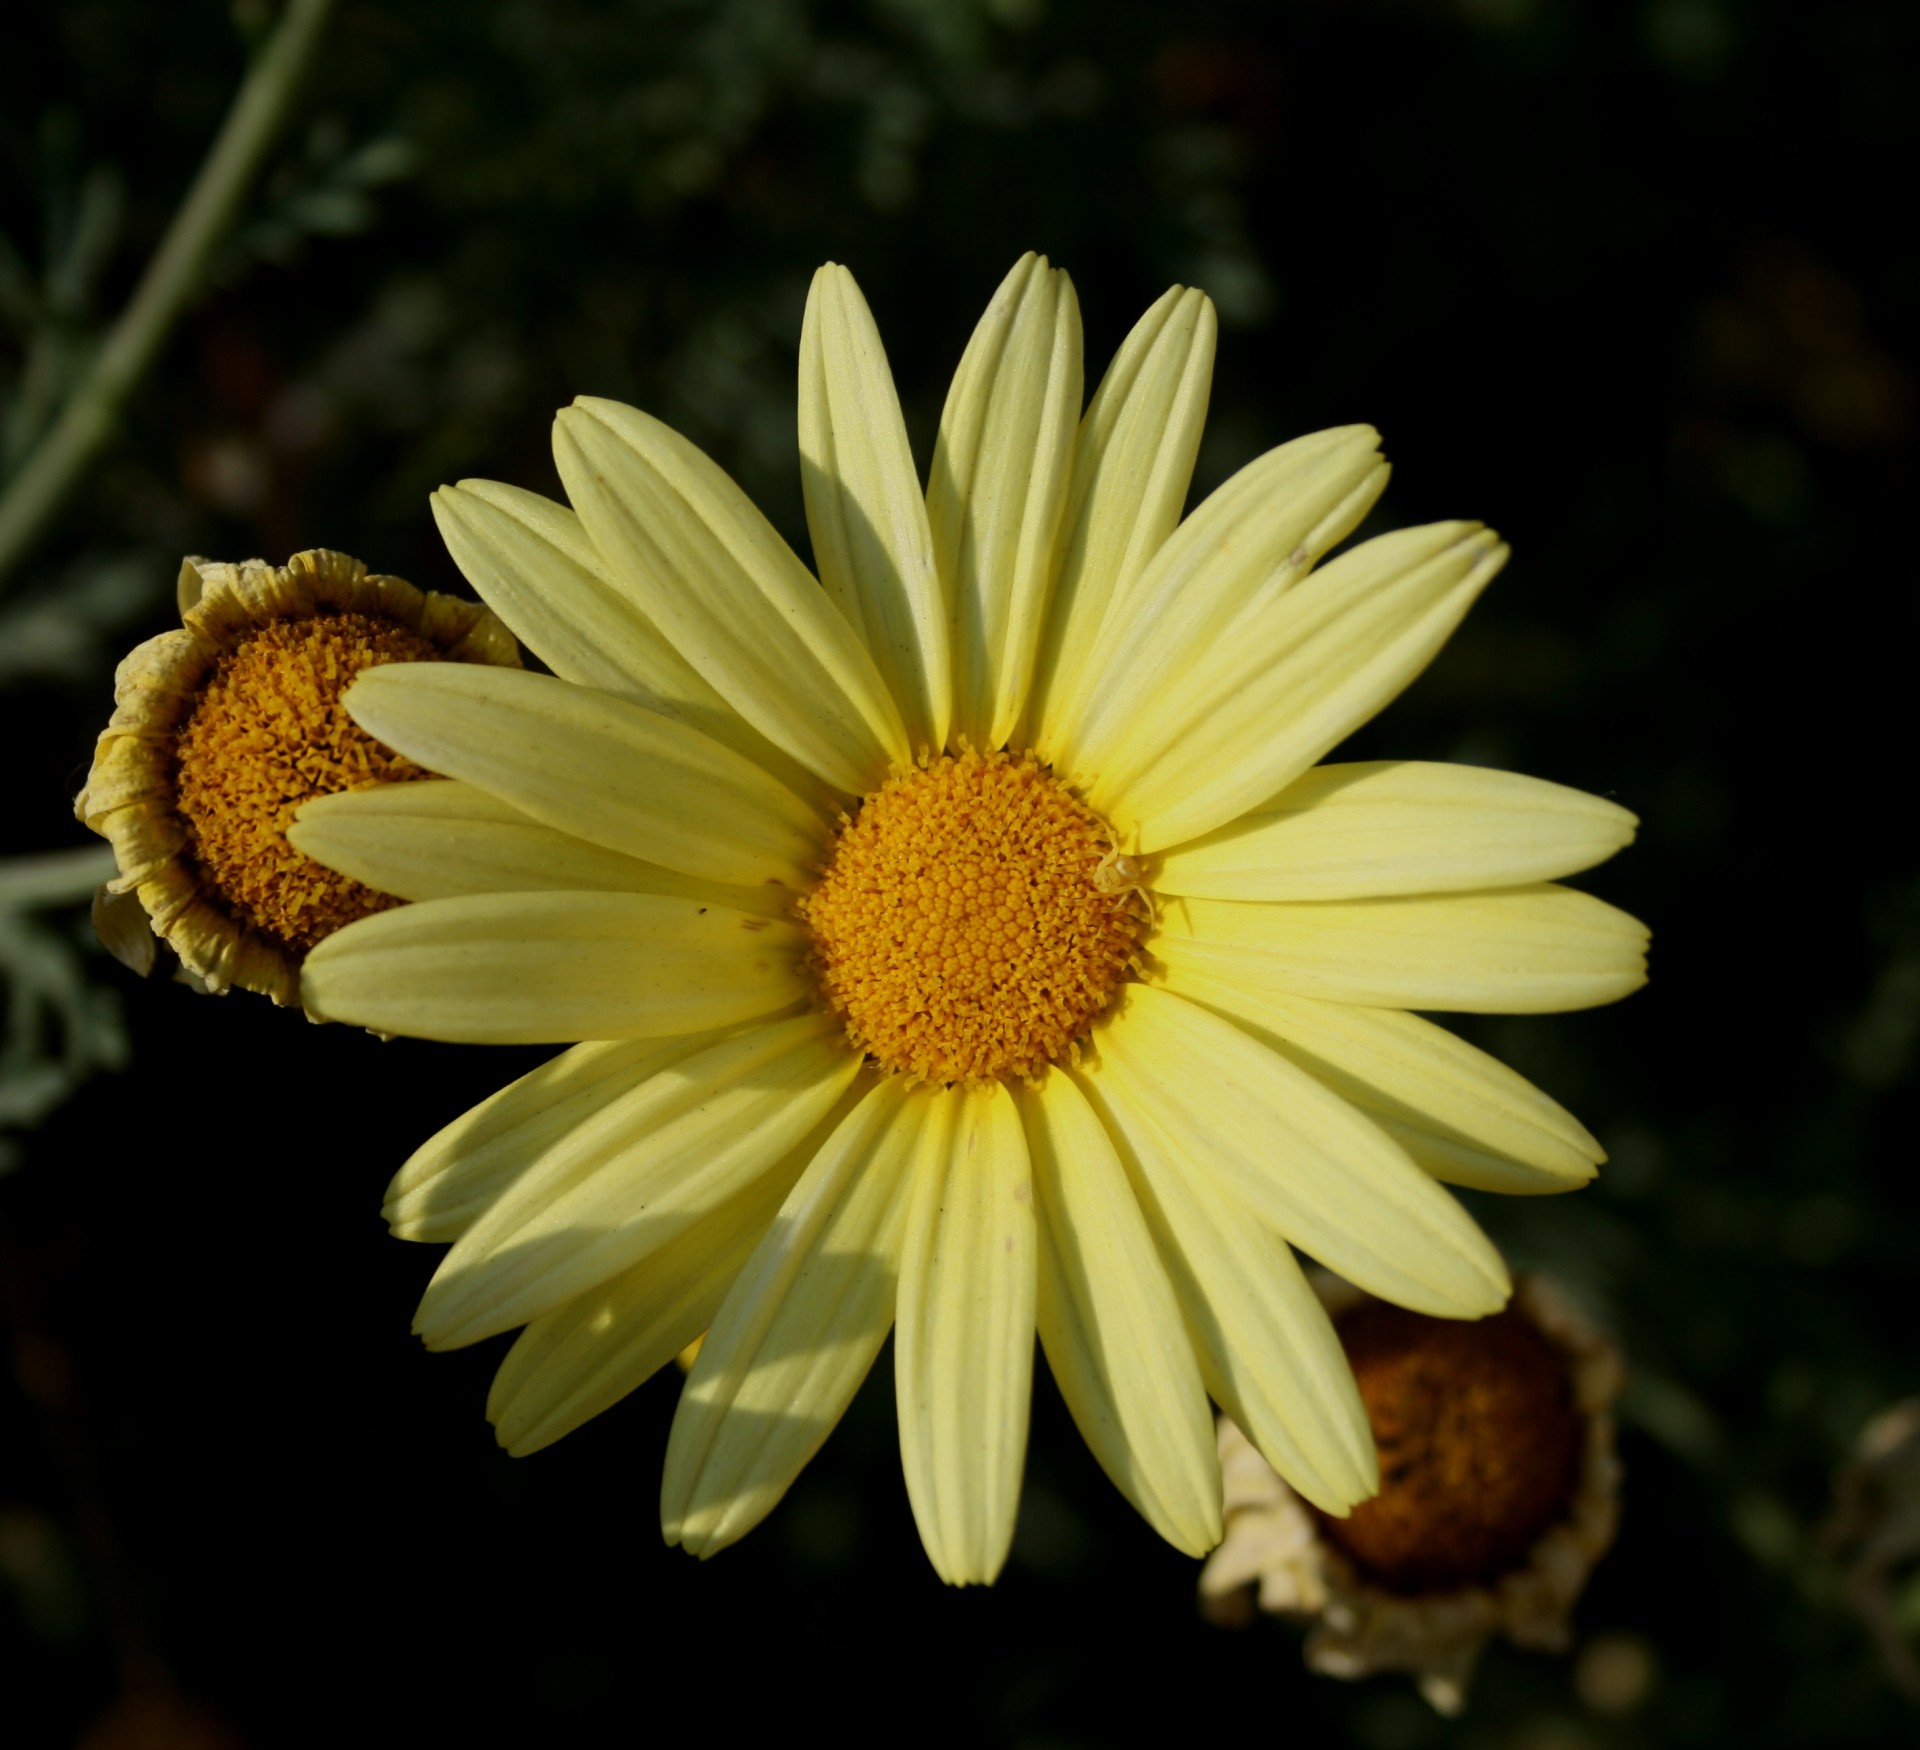 Edit free photo of Flower,daisy,yellow,petals,tiny crab spider - needpix.co...